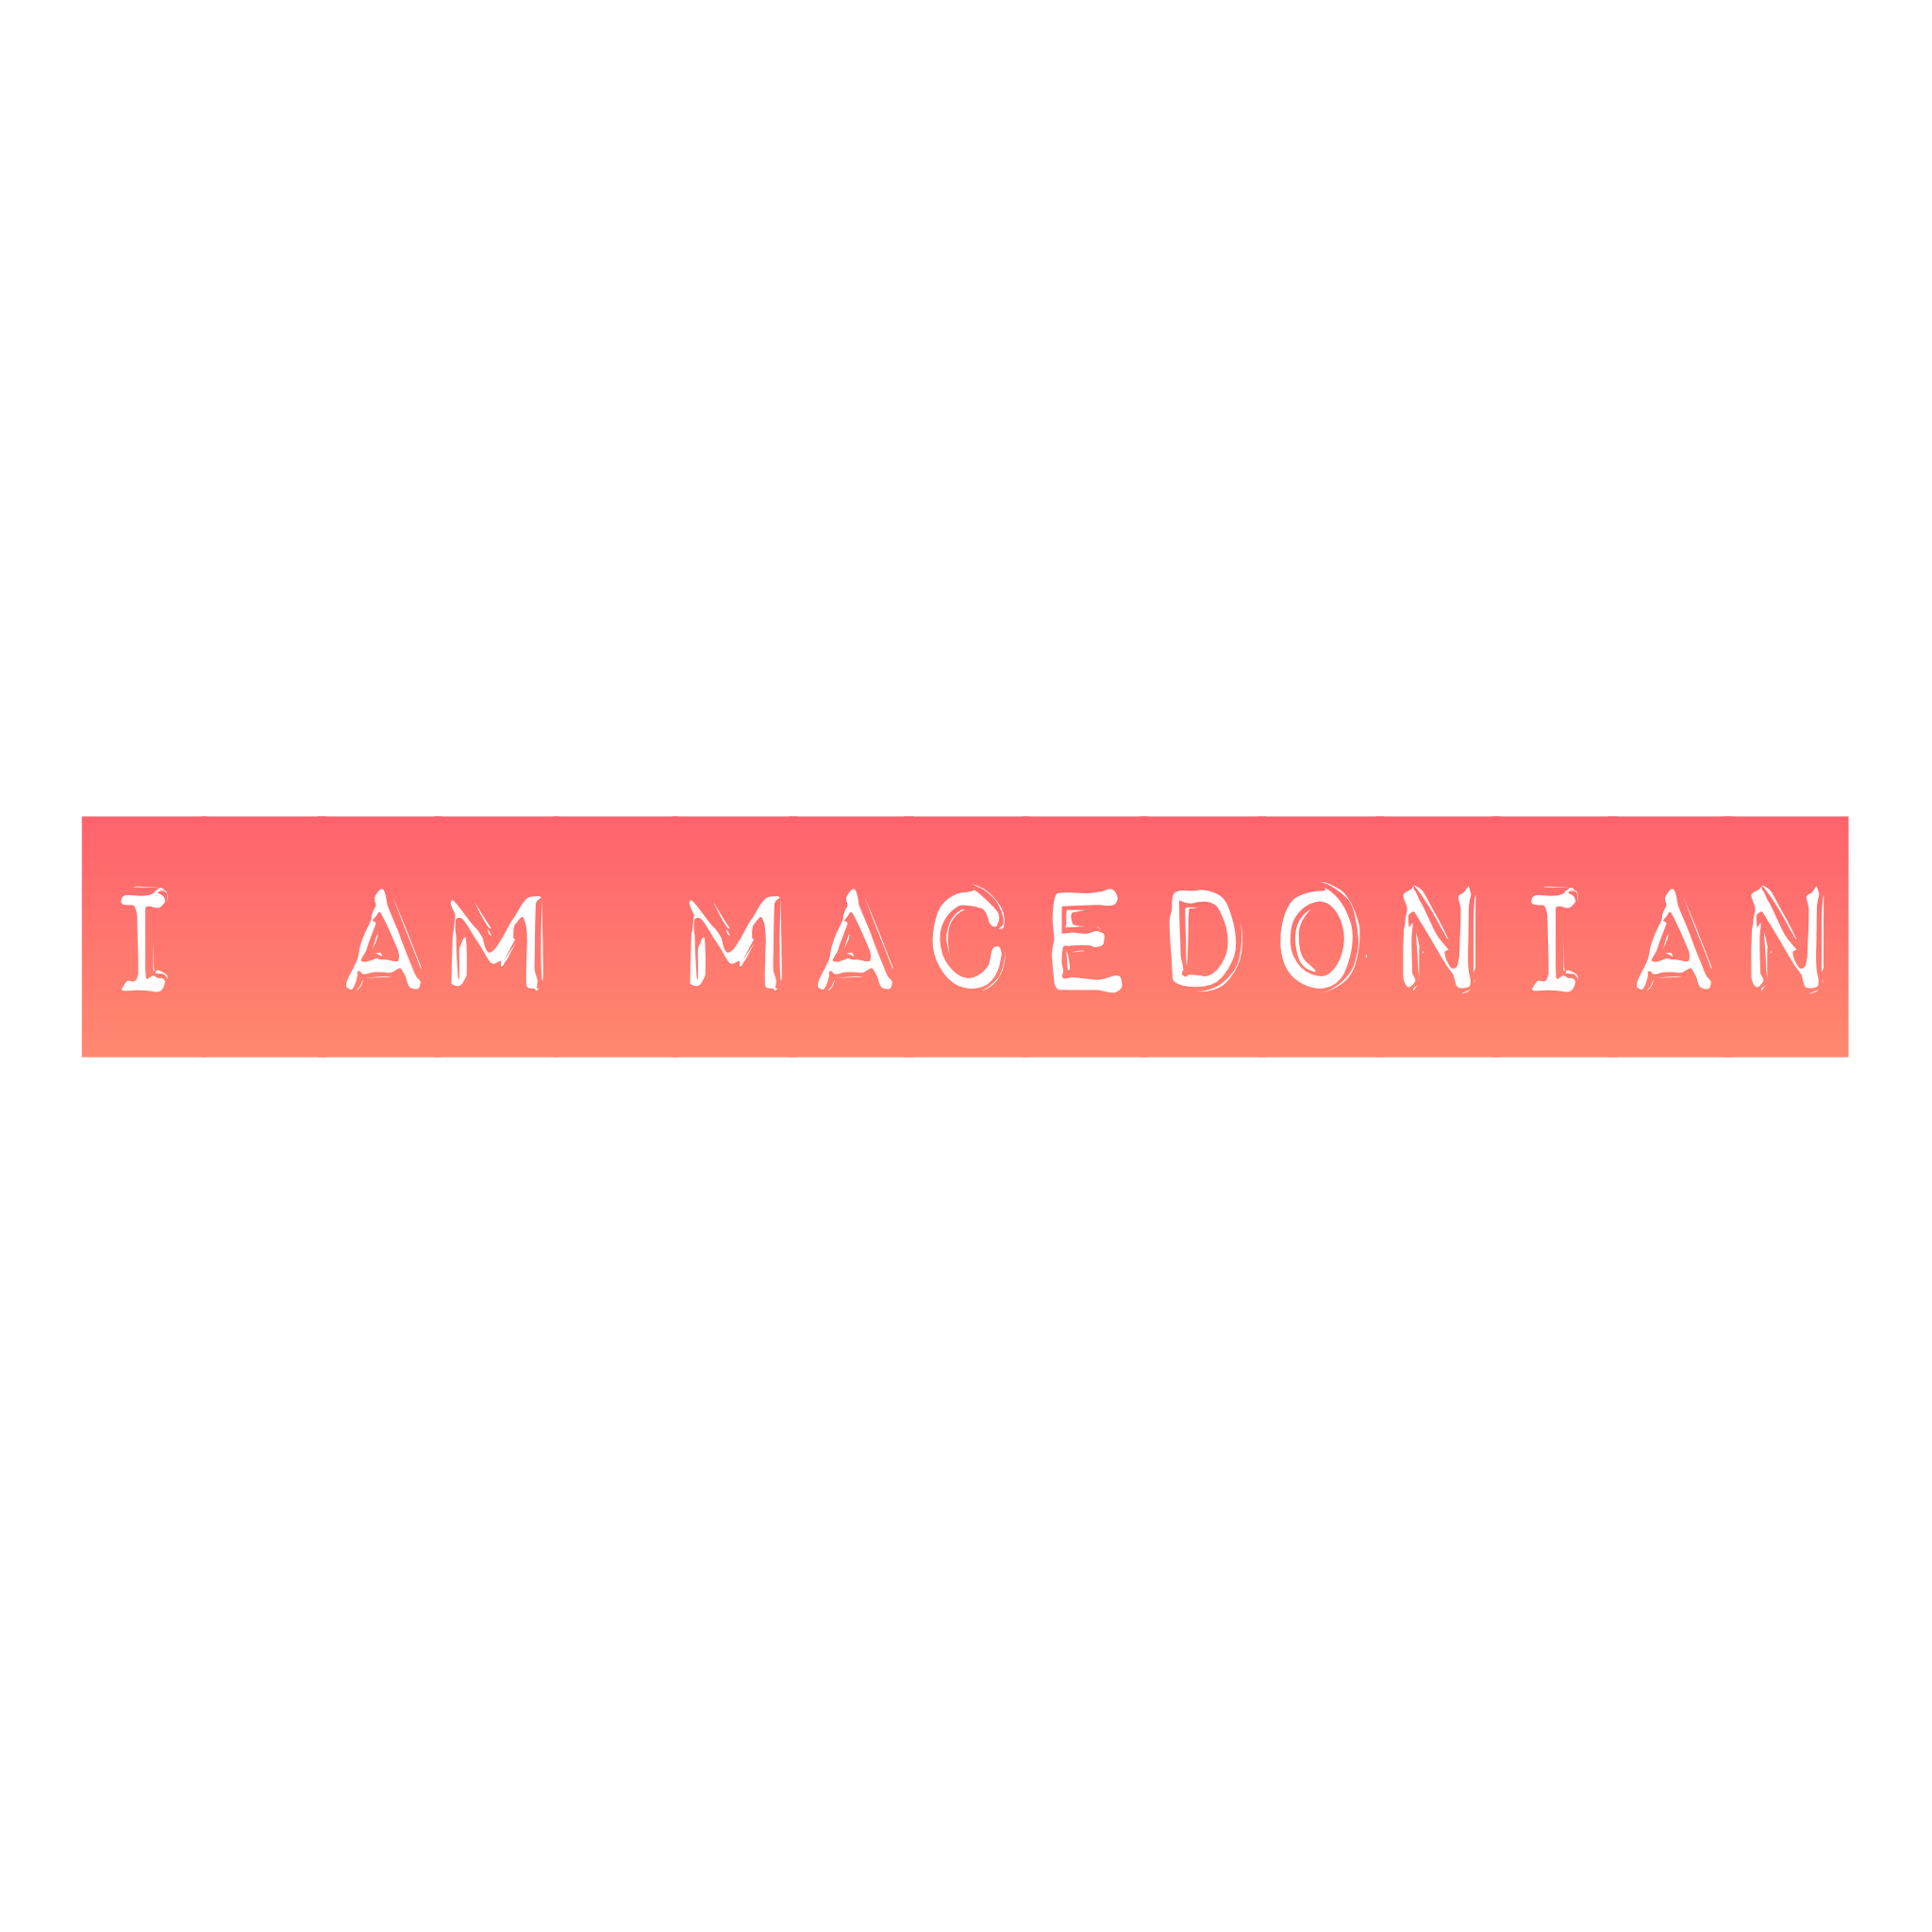 I am Macedonian